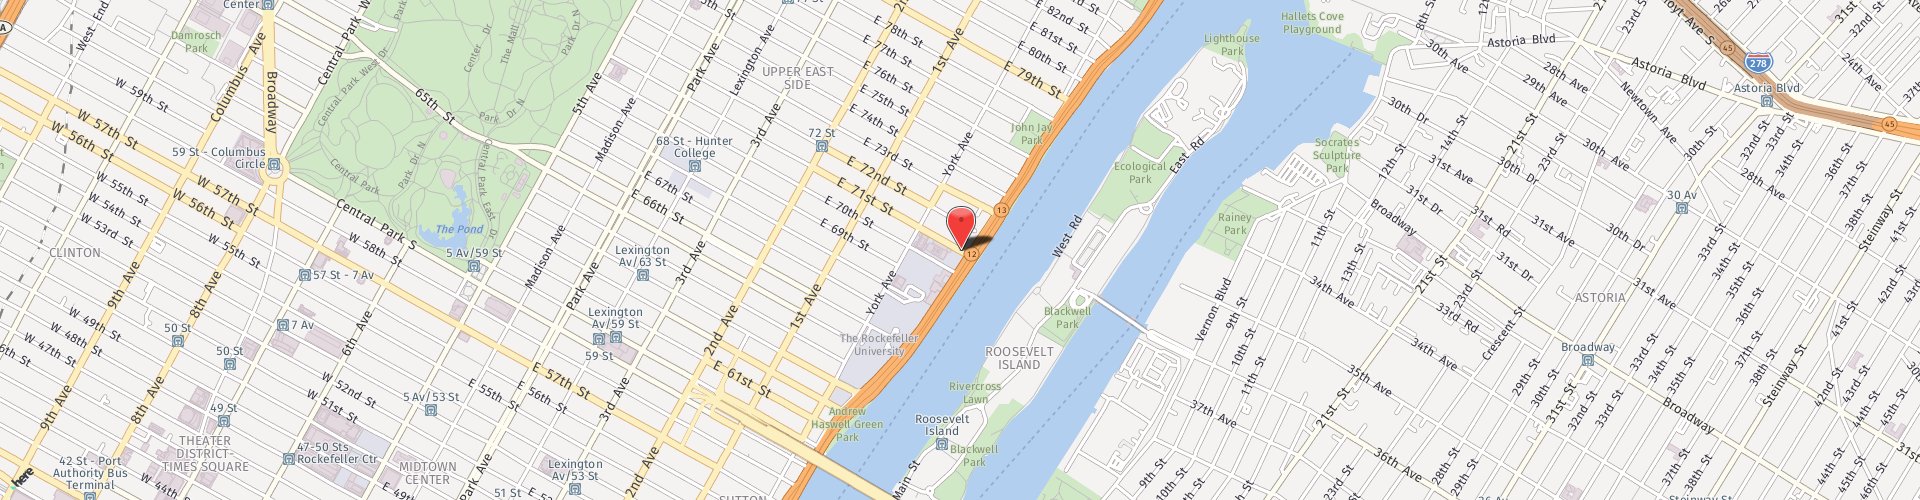 Location Map: 541 East 71st St. New York, NY 10021